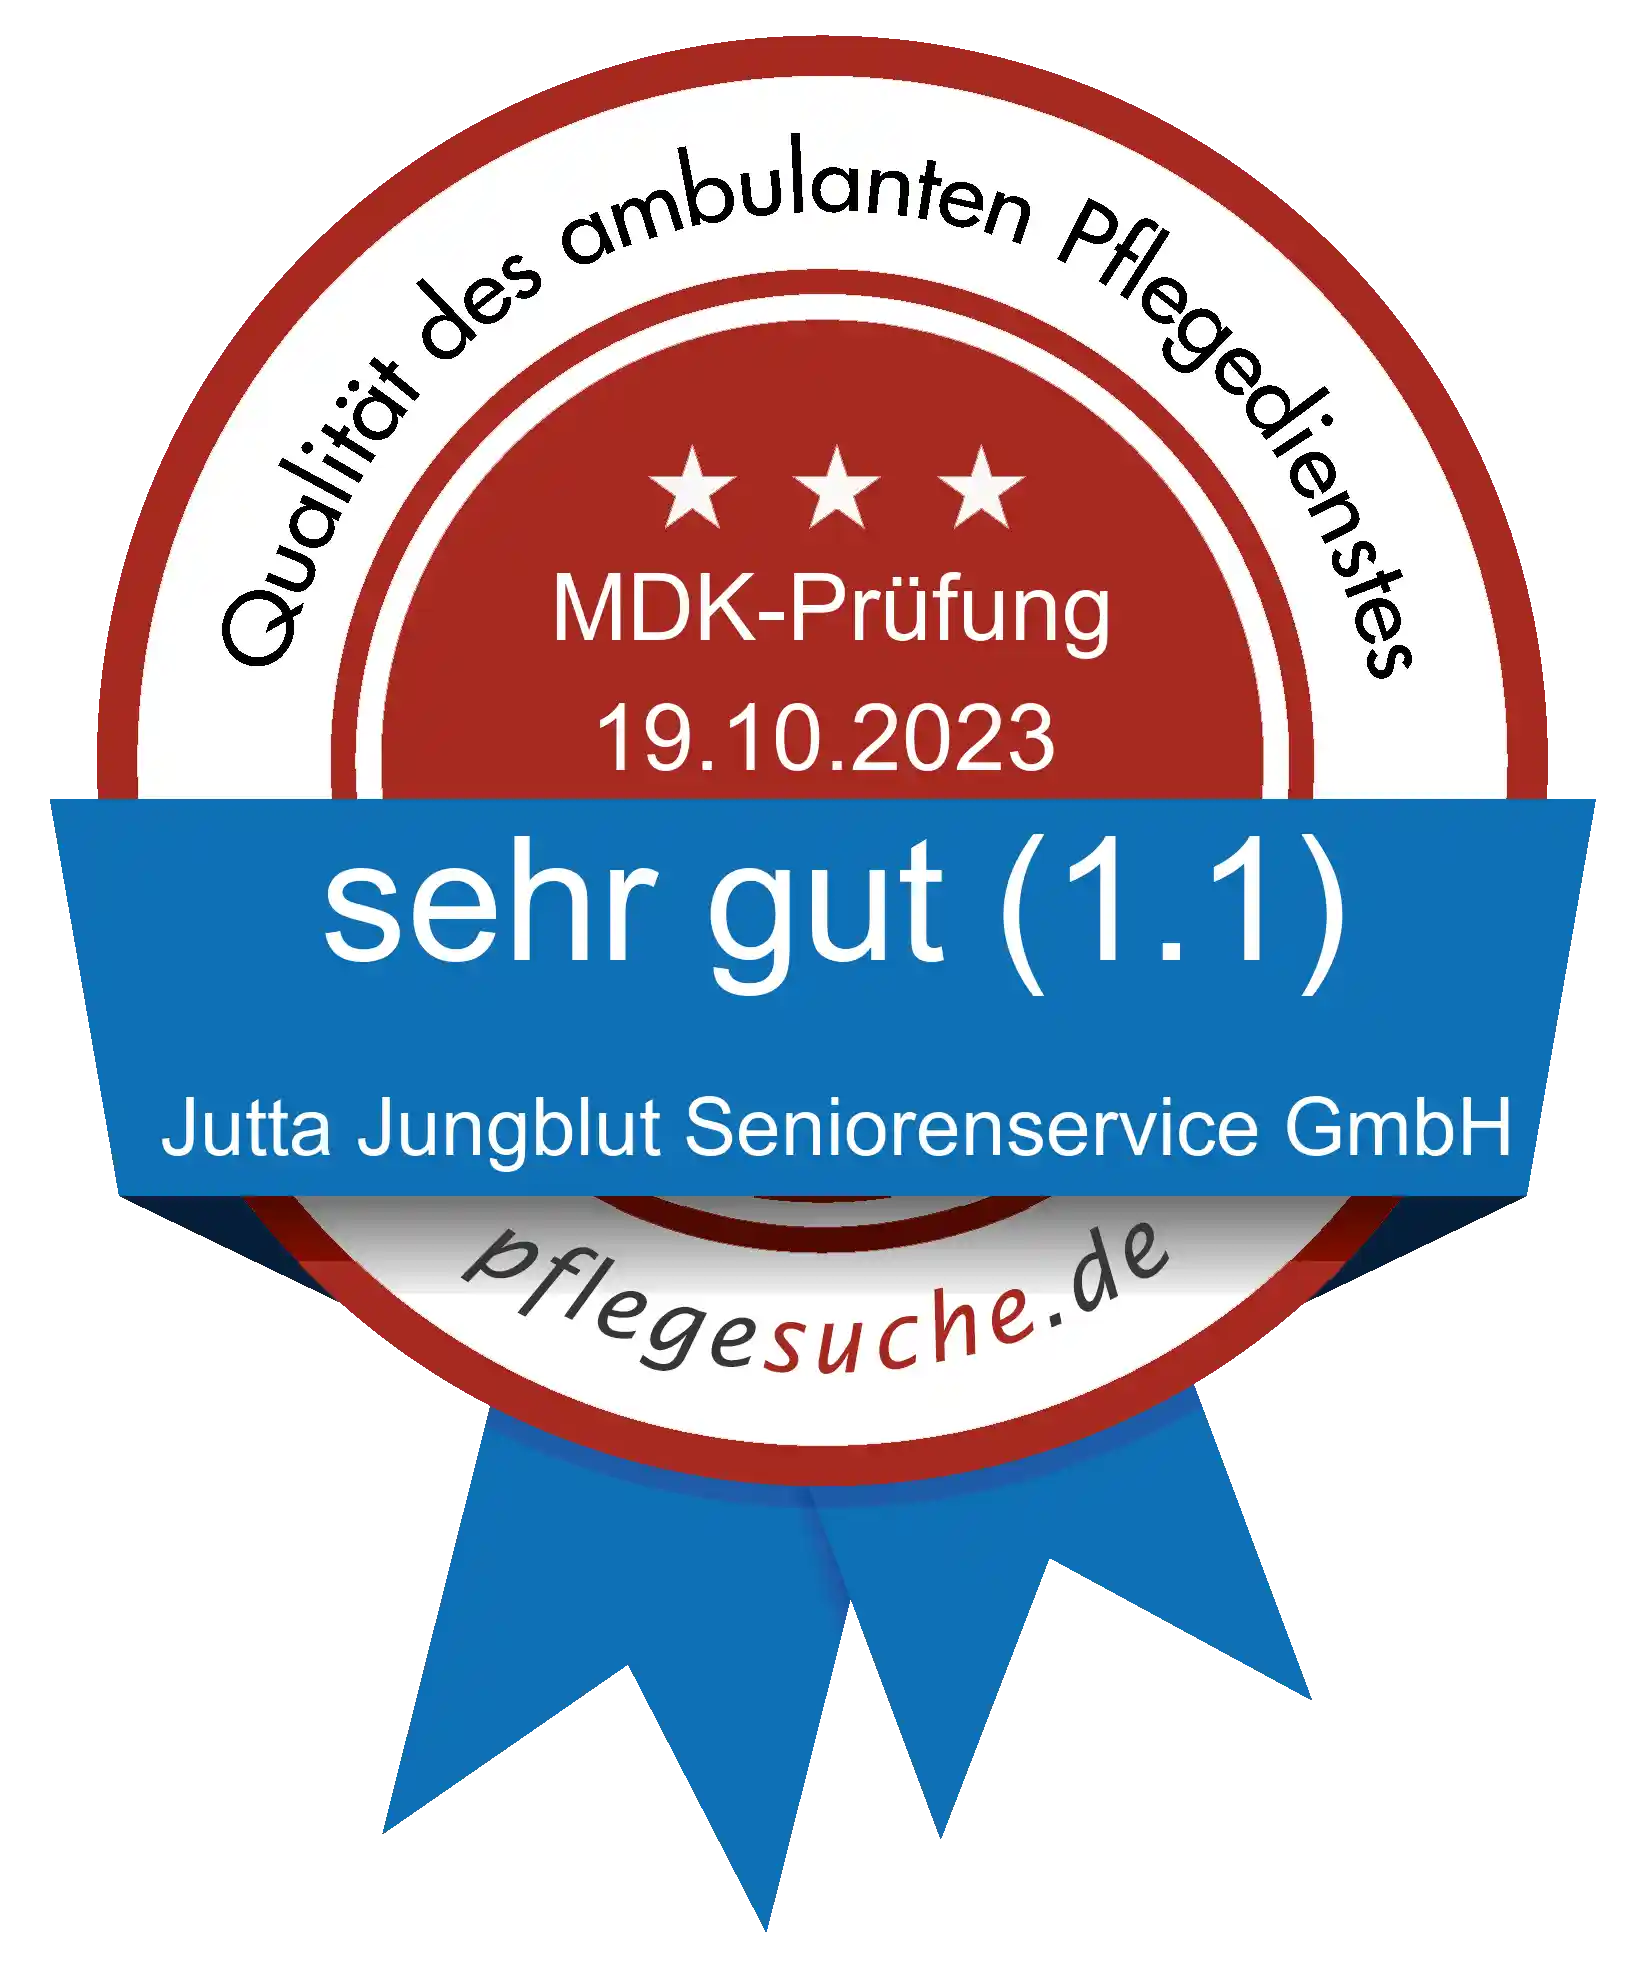 Siegel Benotung: Jutta Jungblut Seniorenservice GmbH